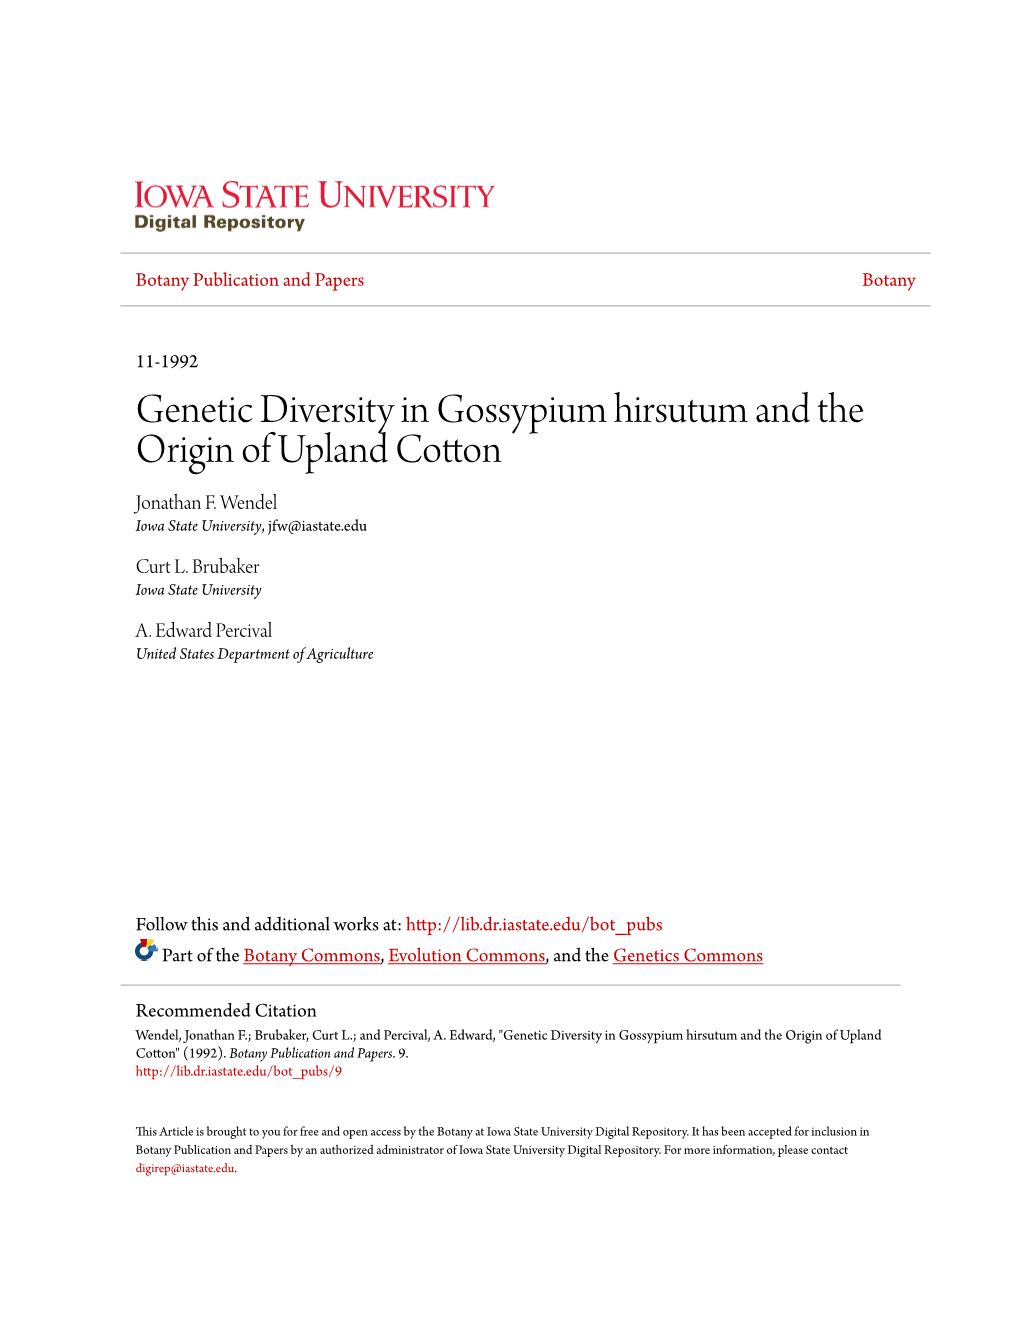 Genetic Diversity in Gossypium Hirsutum and the Origin of Upland Cotton Jonathan F